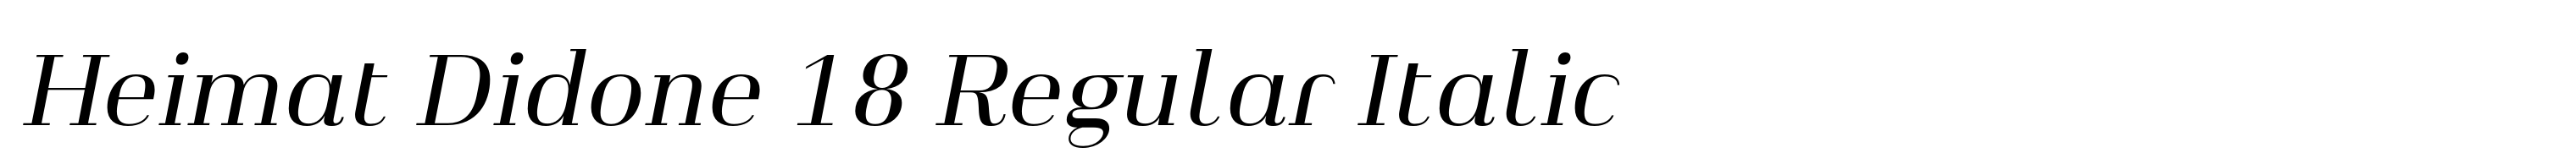 Heimat Didone 18 Regular Italic